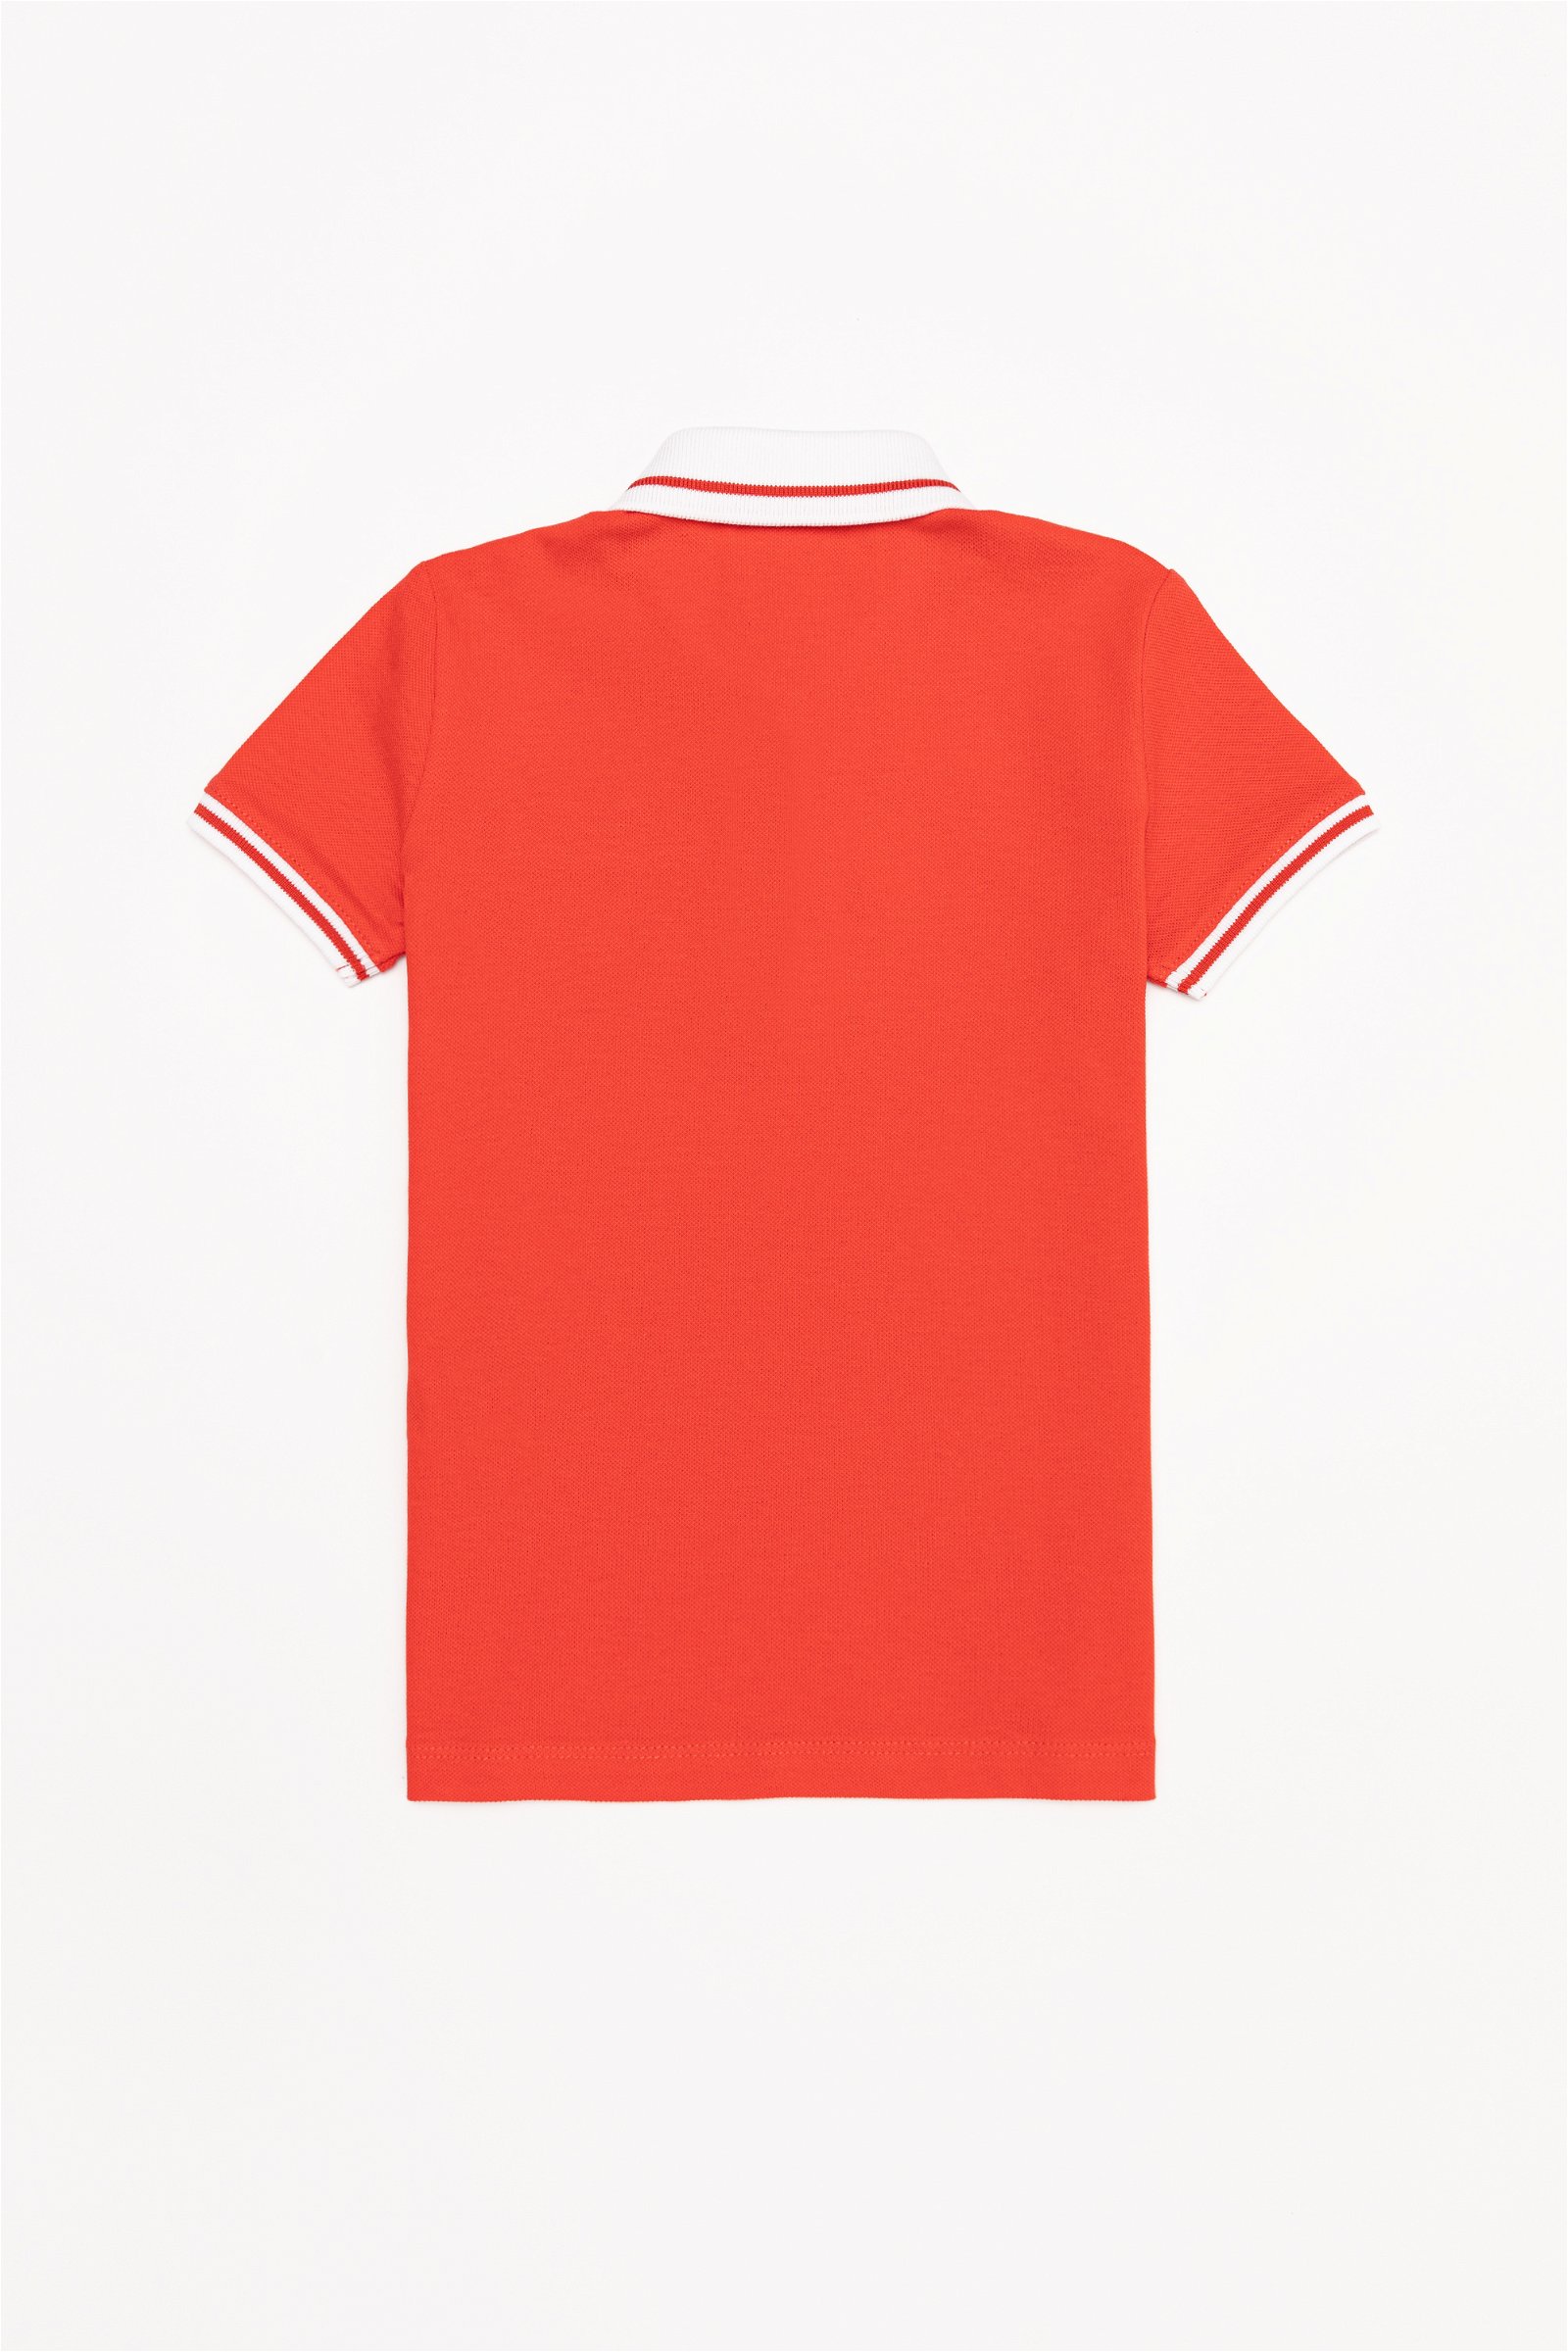 تی شرت یقه پولو قرمز  اندامی  دخترانه یو اس پولو